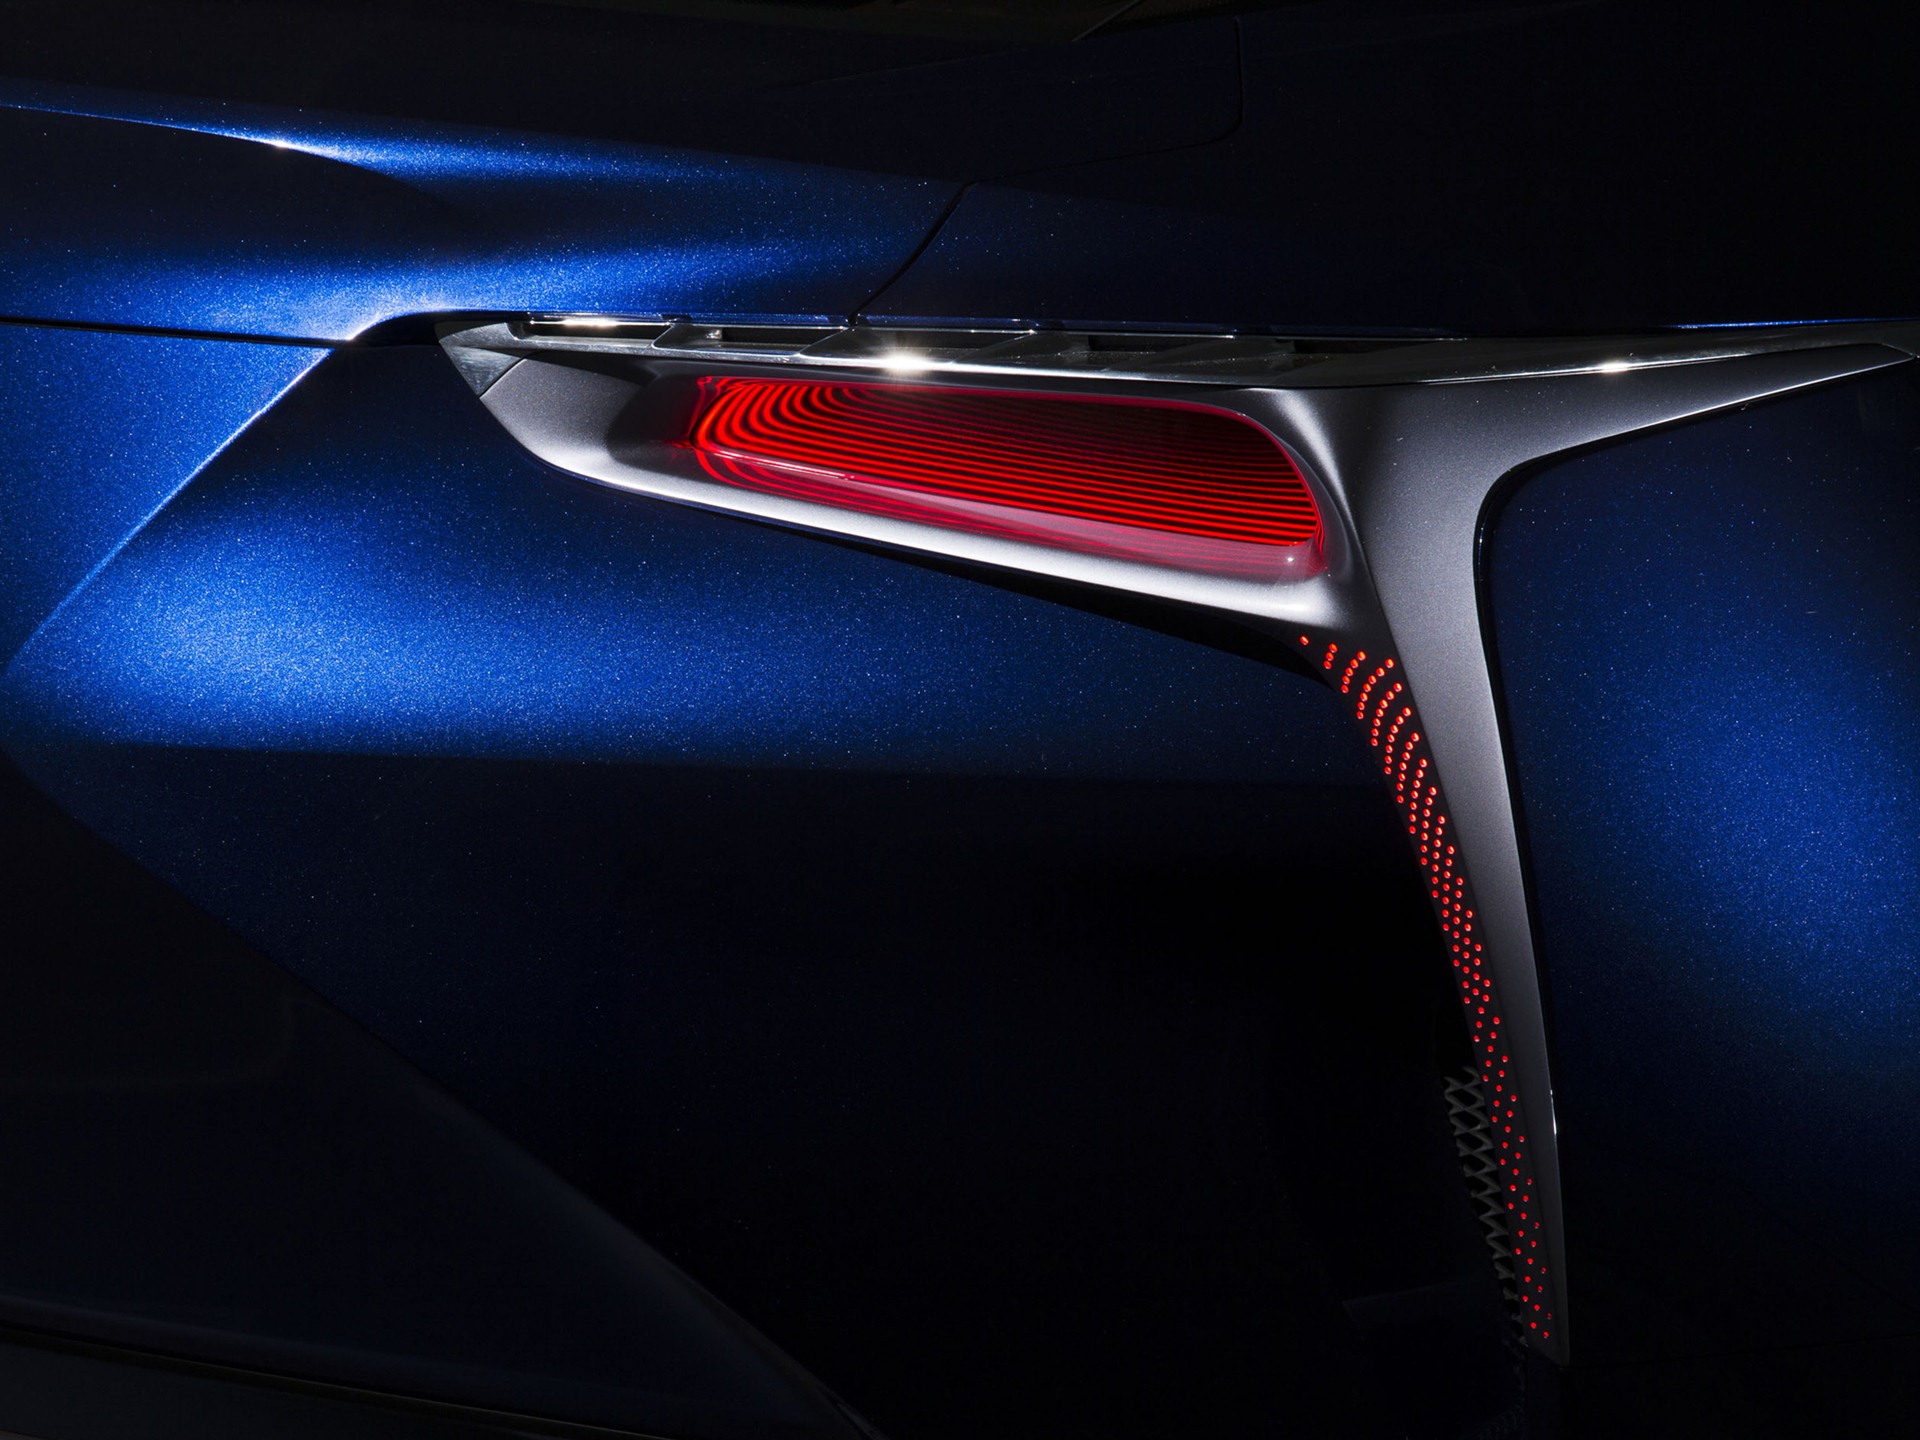 2012 Lexus LF-LC Blue concept 雷克萨斯 蓝色概念车 高清壁纸13 - 1920x1440